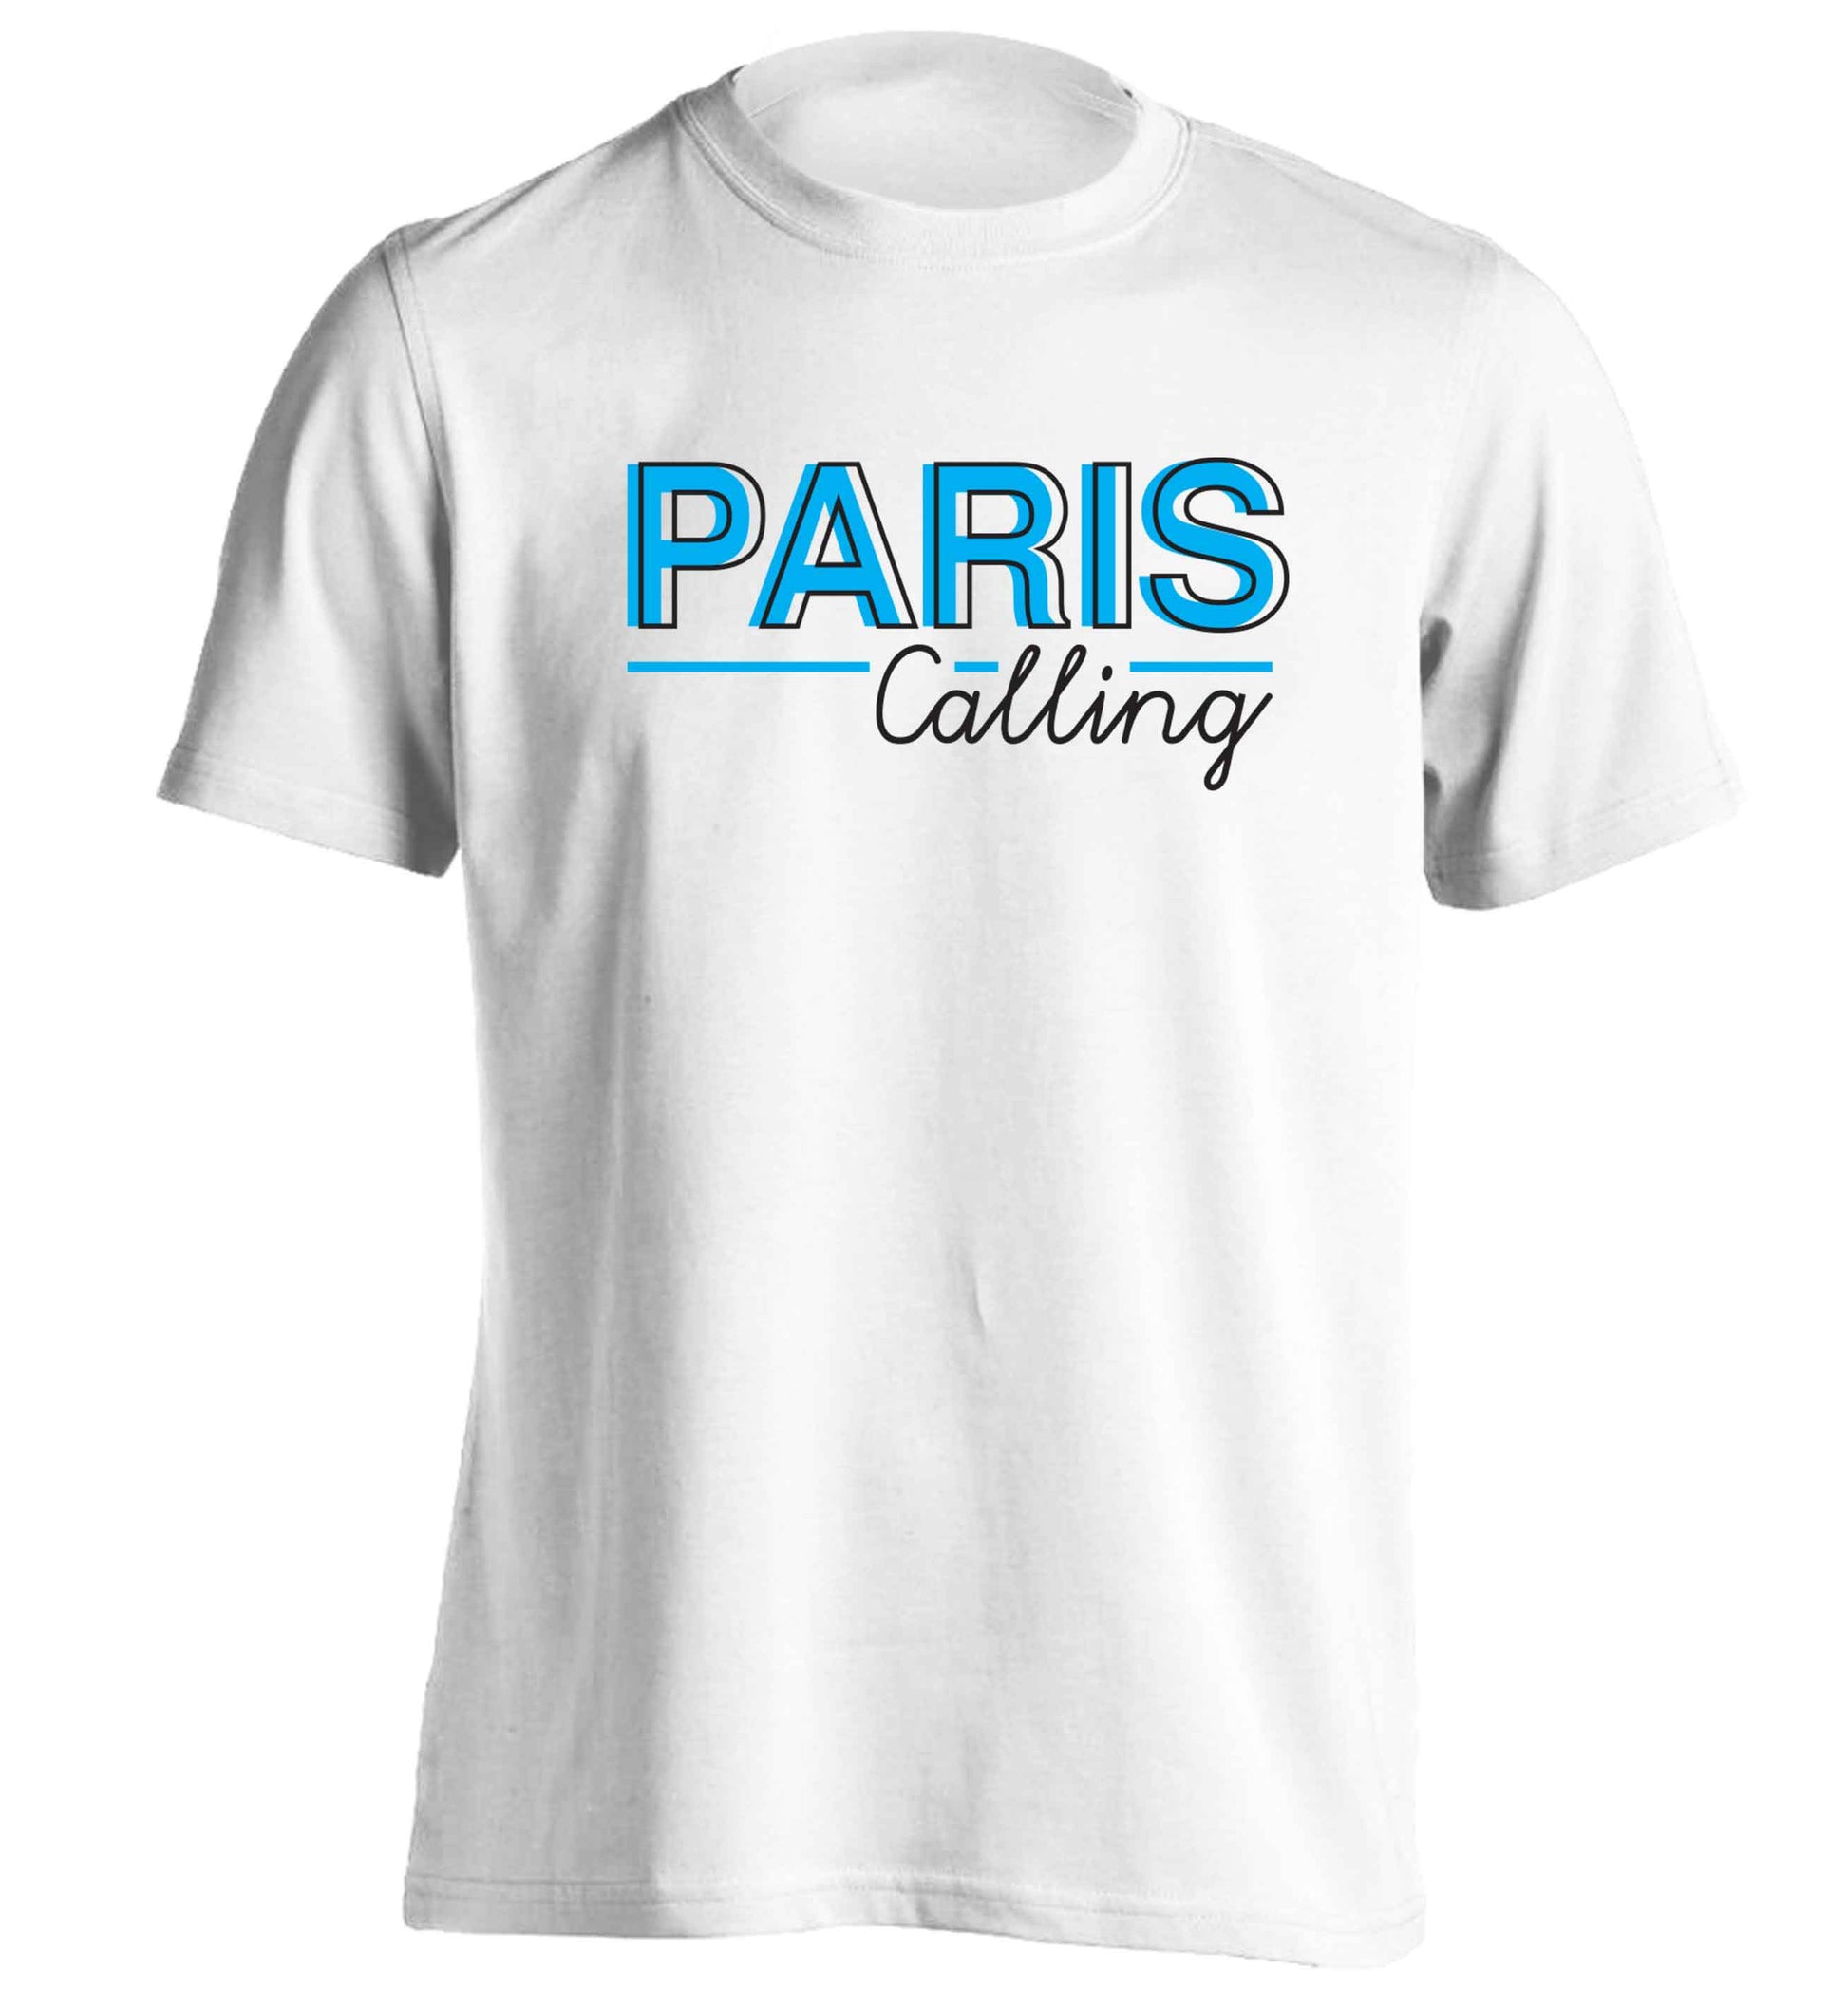 Paris calling adults unisex white Tshirt 2XL